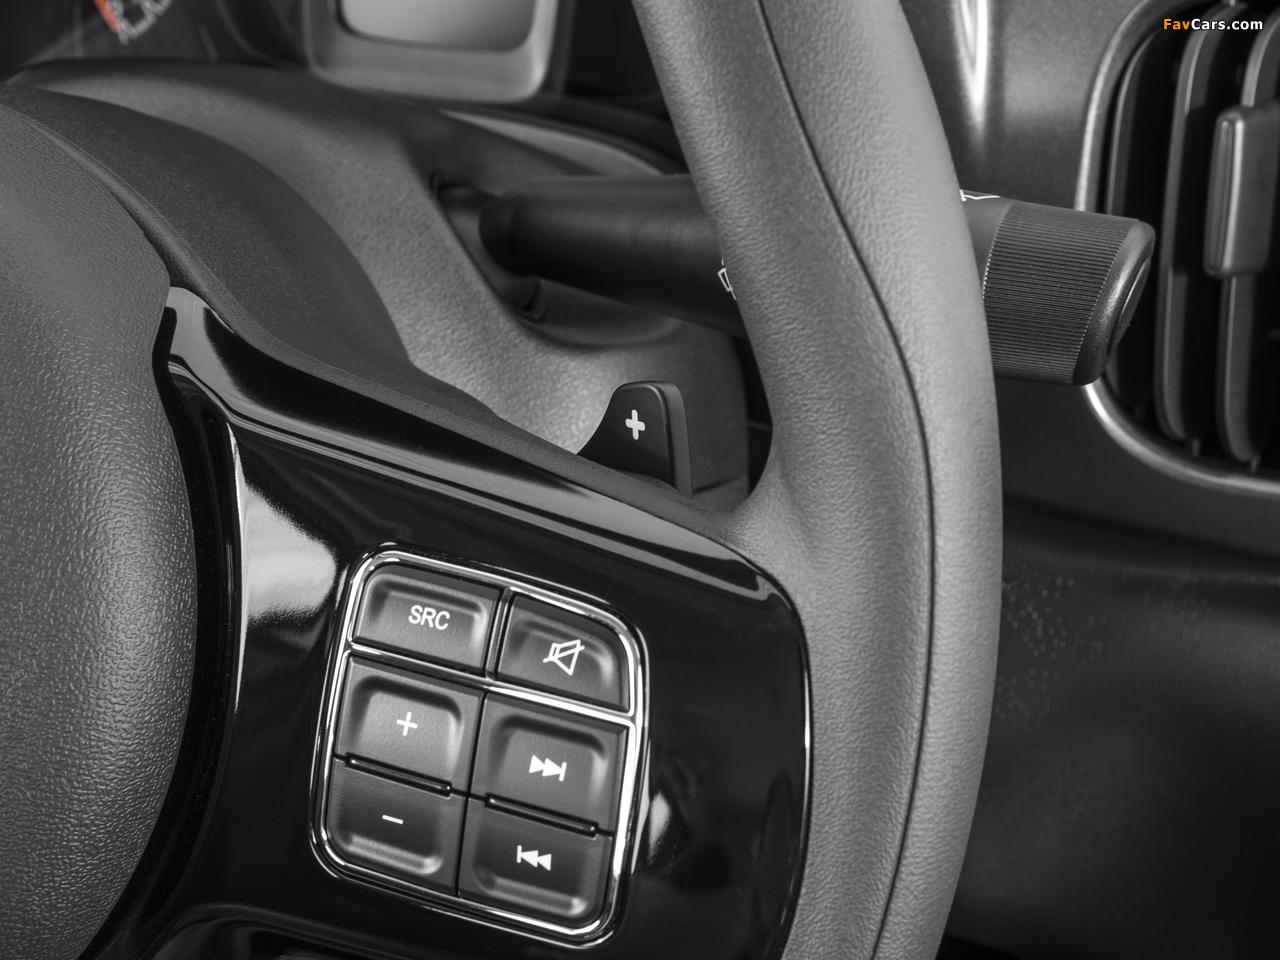 Fiat Mobi Drive GSR (344) 2017 pictures (1280 x 960)